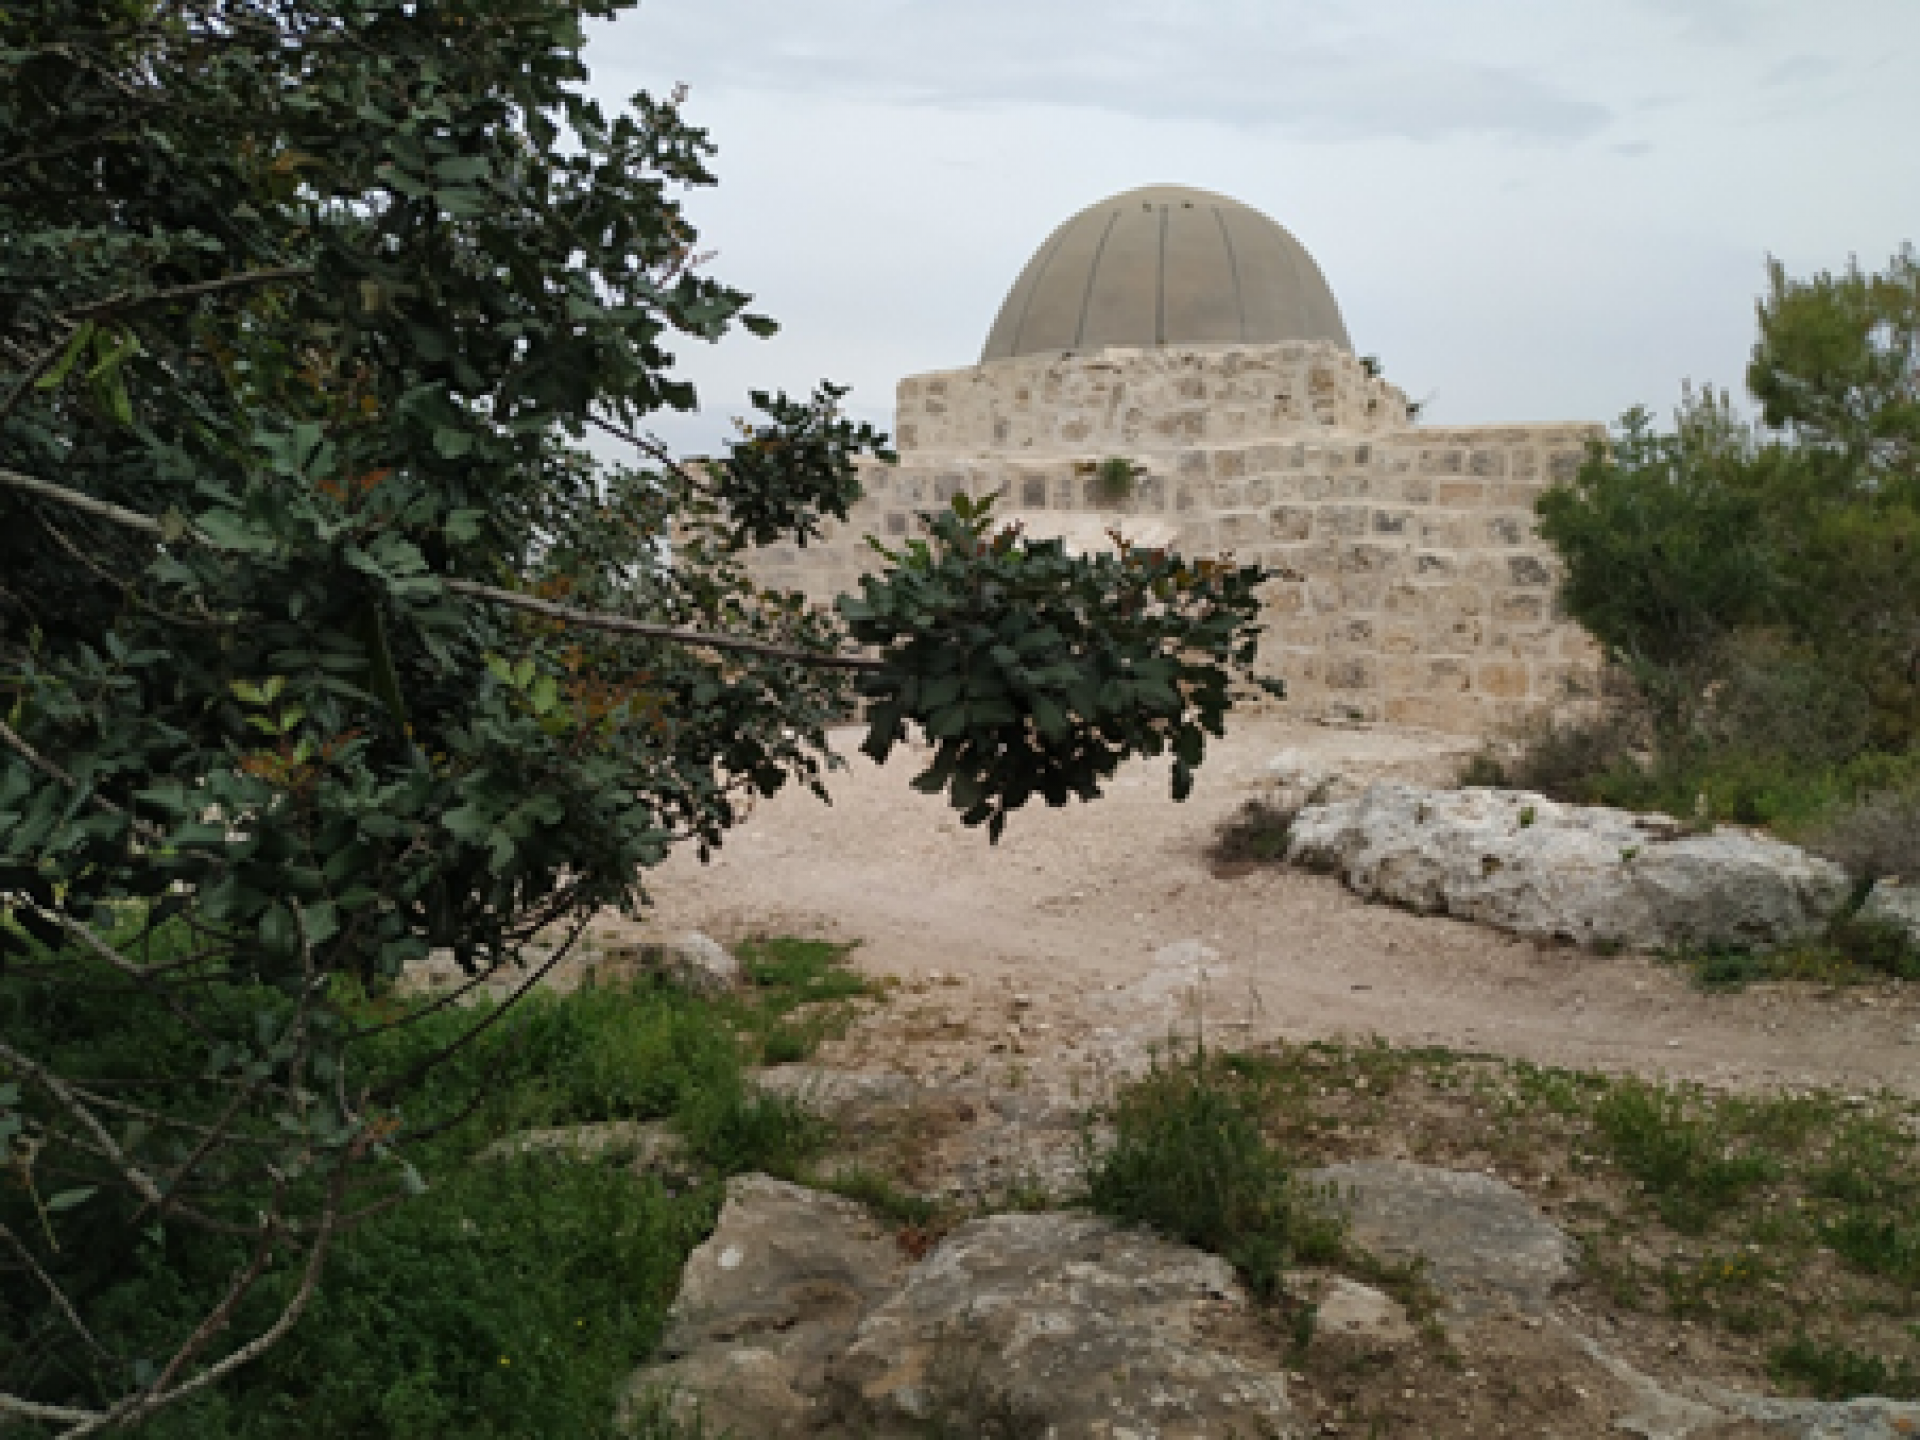 Makam Ibn Jebel in Canada Park, well kept